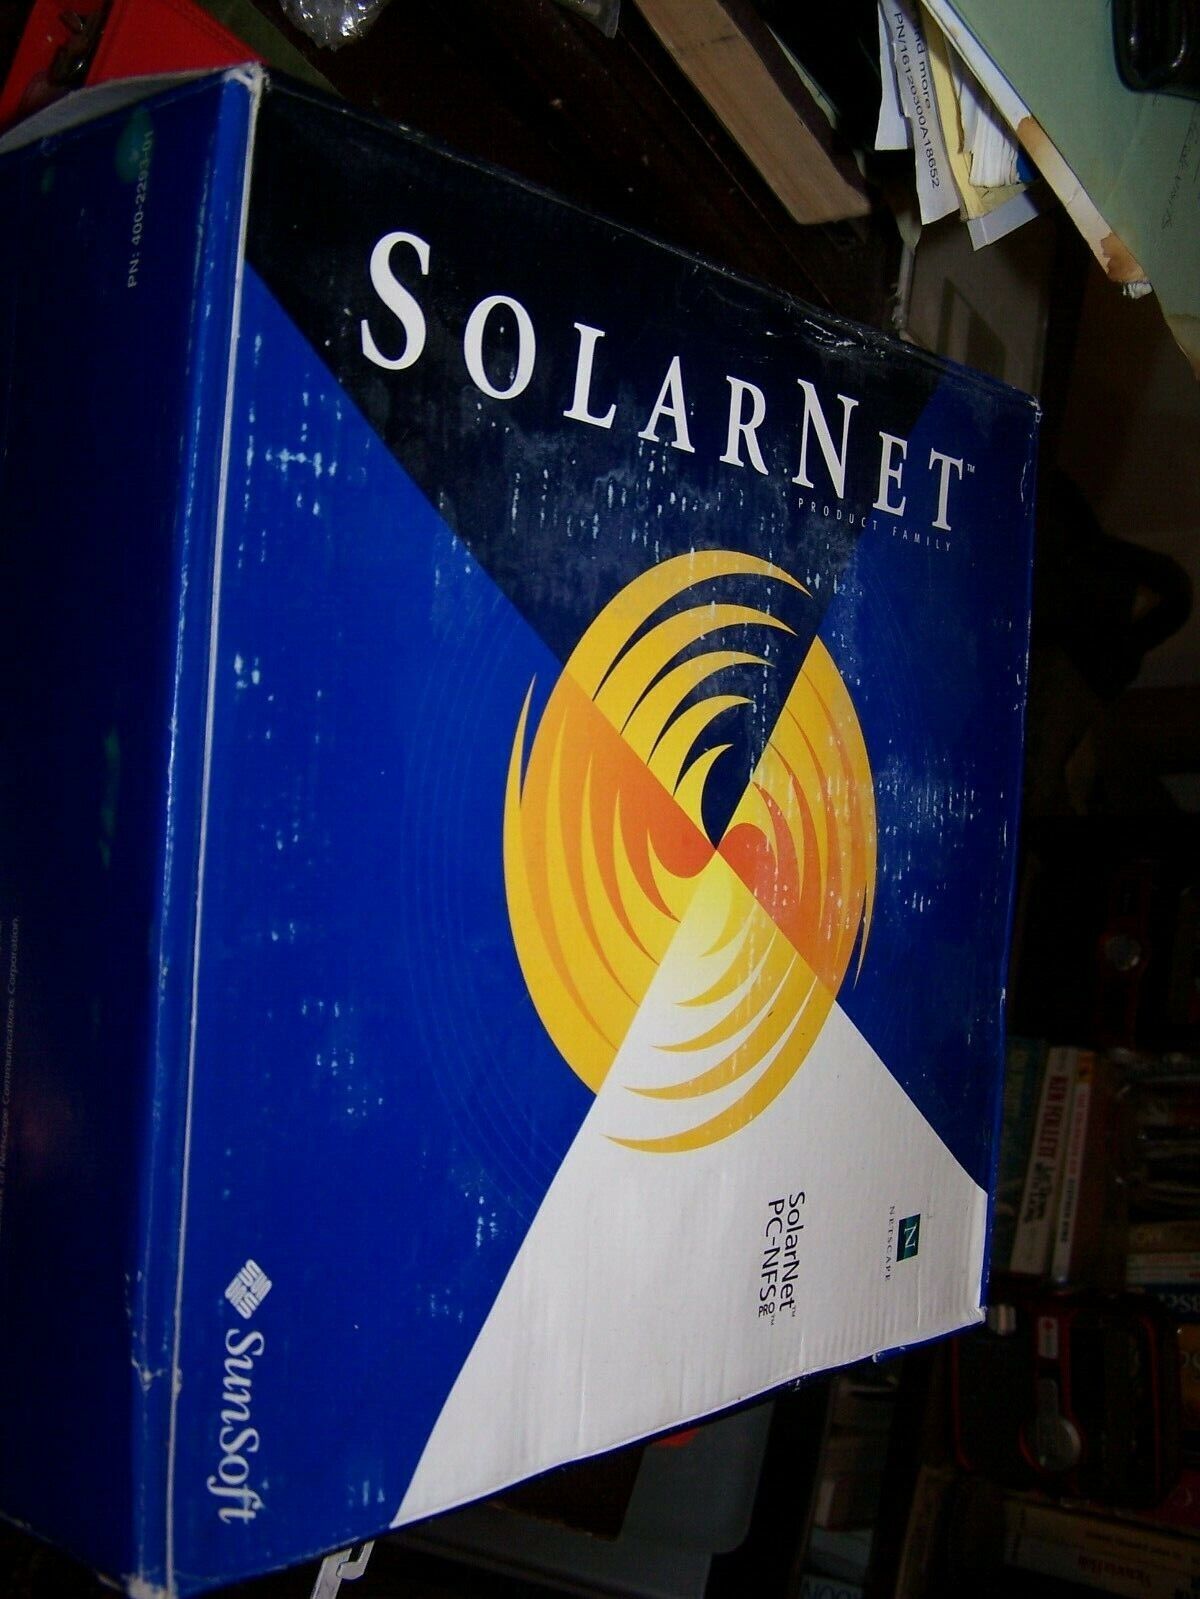  Sun Microsystems Inc SunSoft SolarNet PC-NFS Pro Software